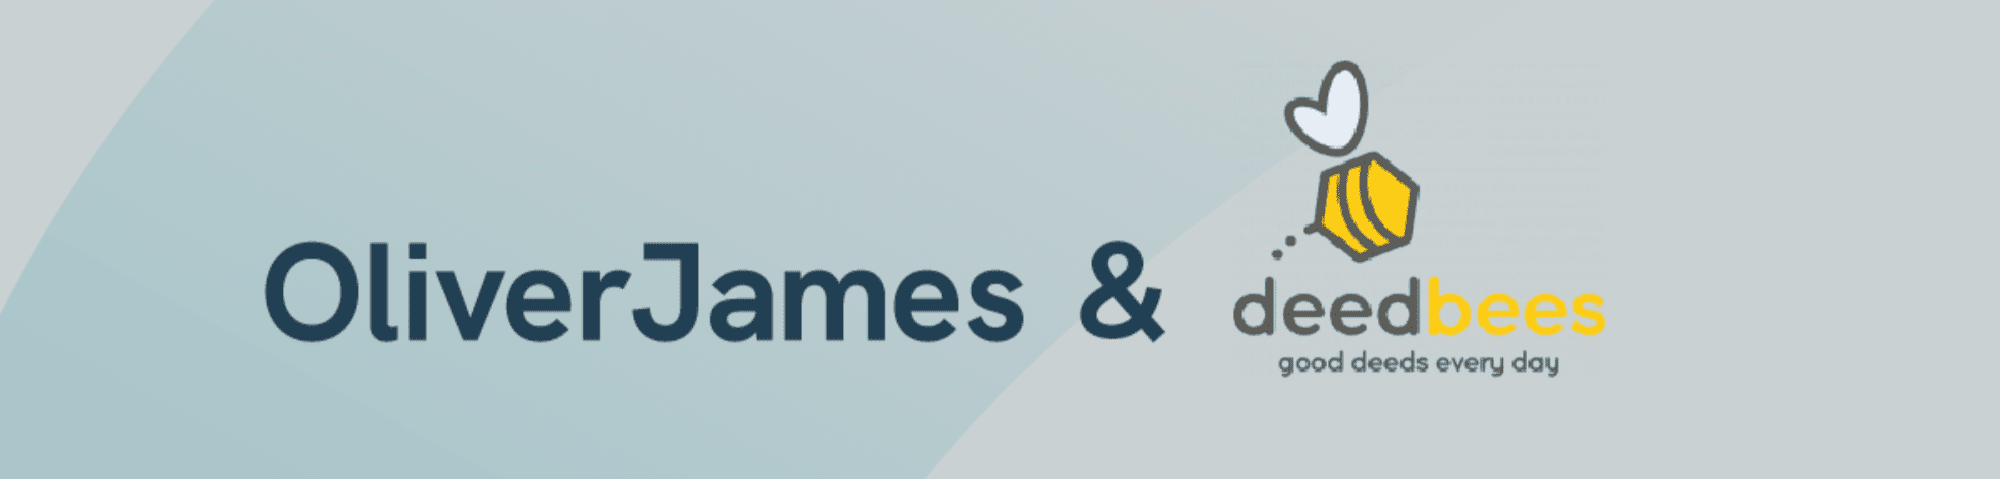 Partnership announcement | Oliver James & Deedbees